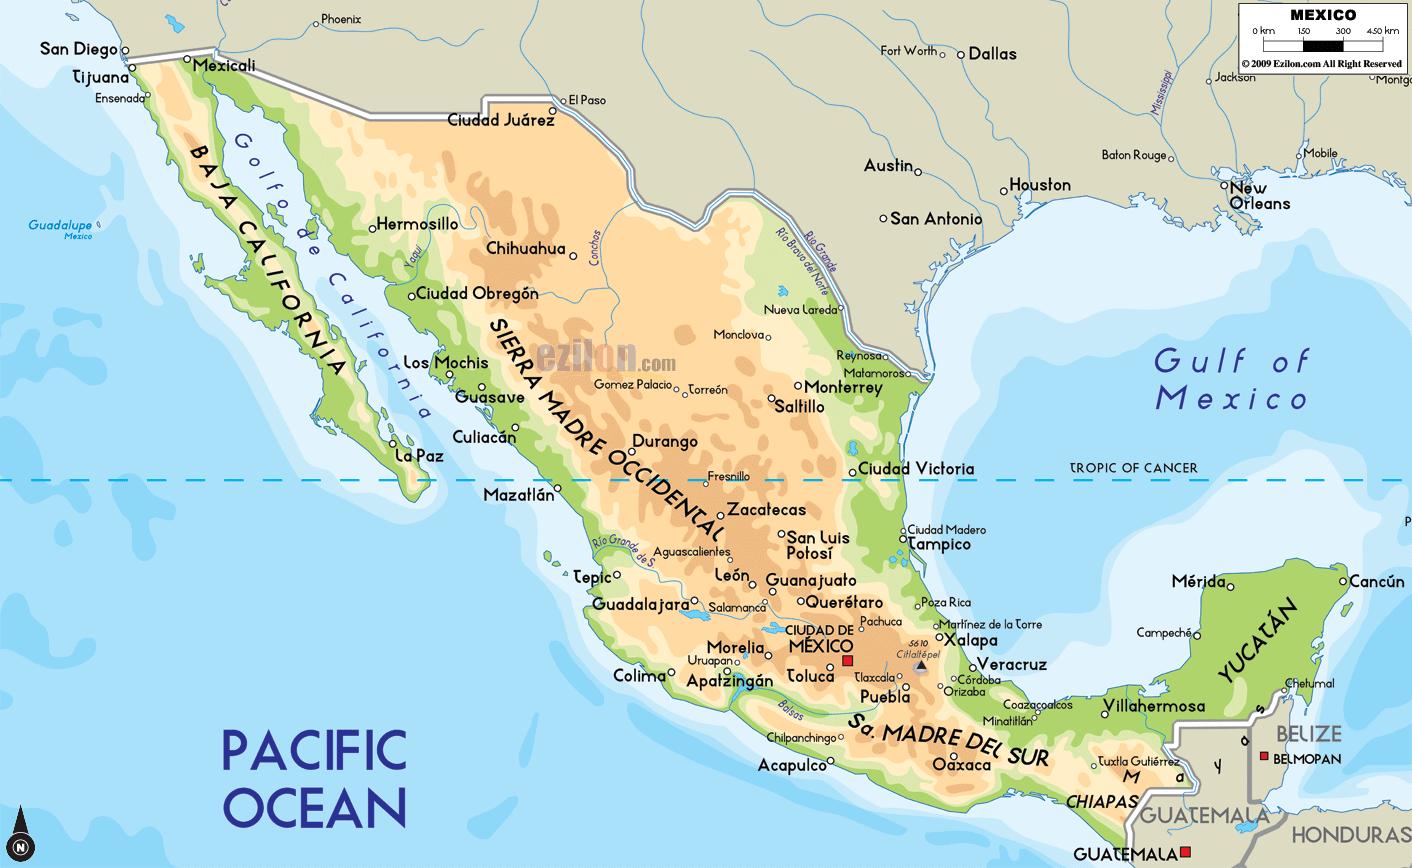 Meksiko fyysinen kartta - Meksiko kartta fyysinen (Keski-Amerikka - Amerikka )